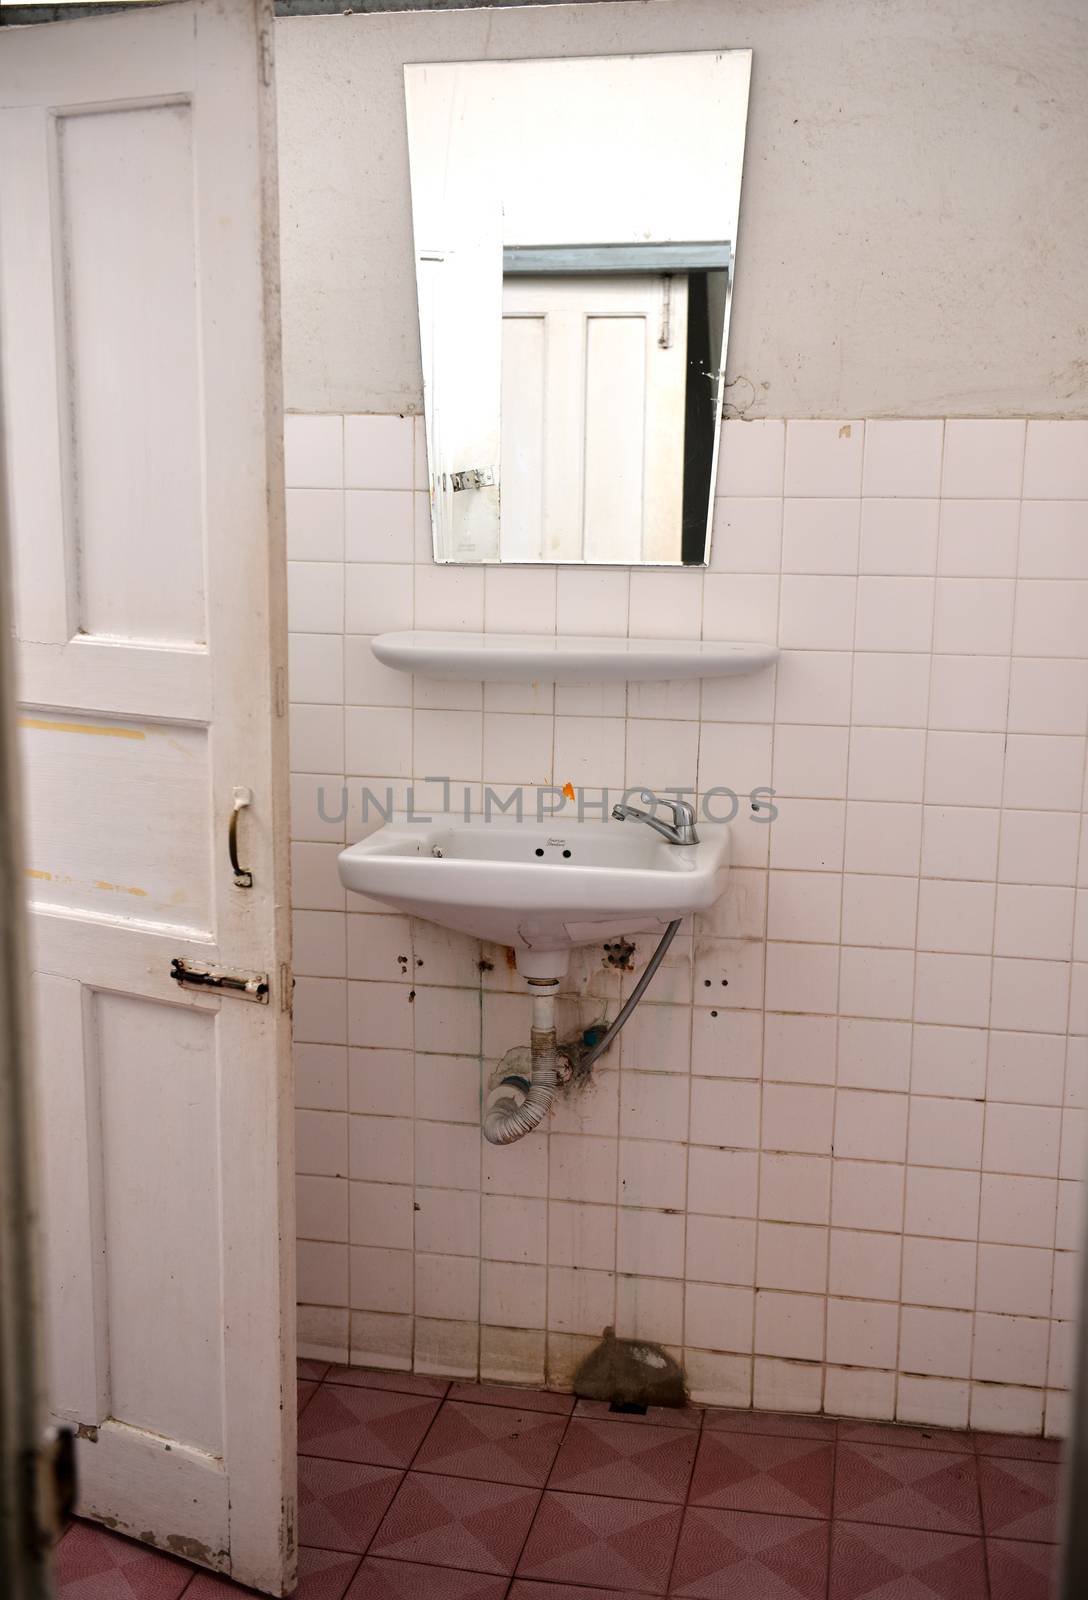 old toilet